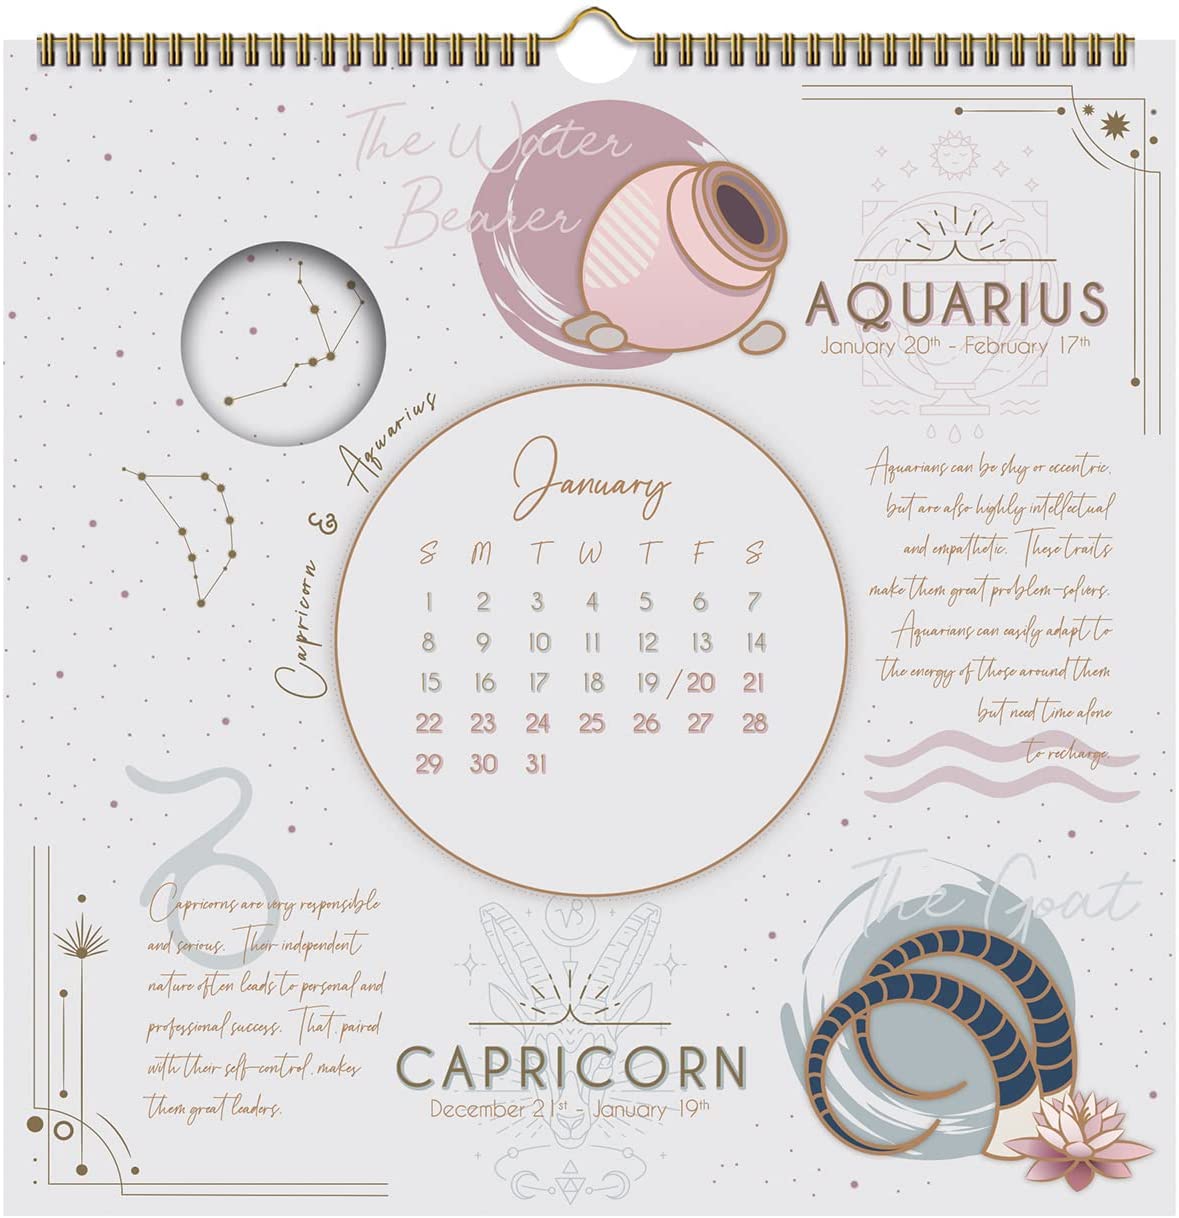 Zodiac 2023 DieCut Spiral Calendar - Calendars.com